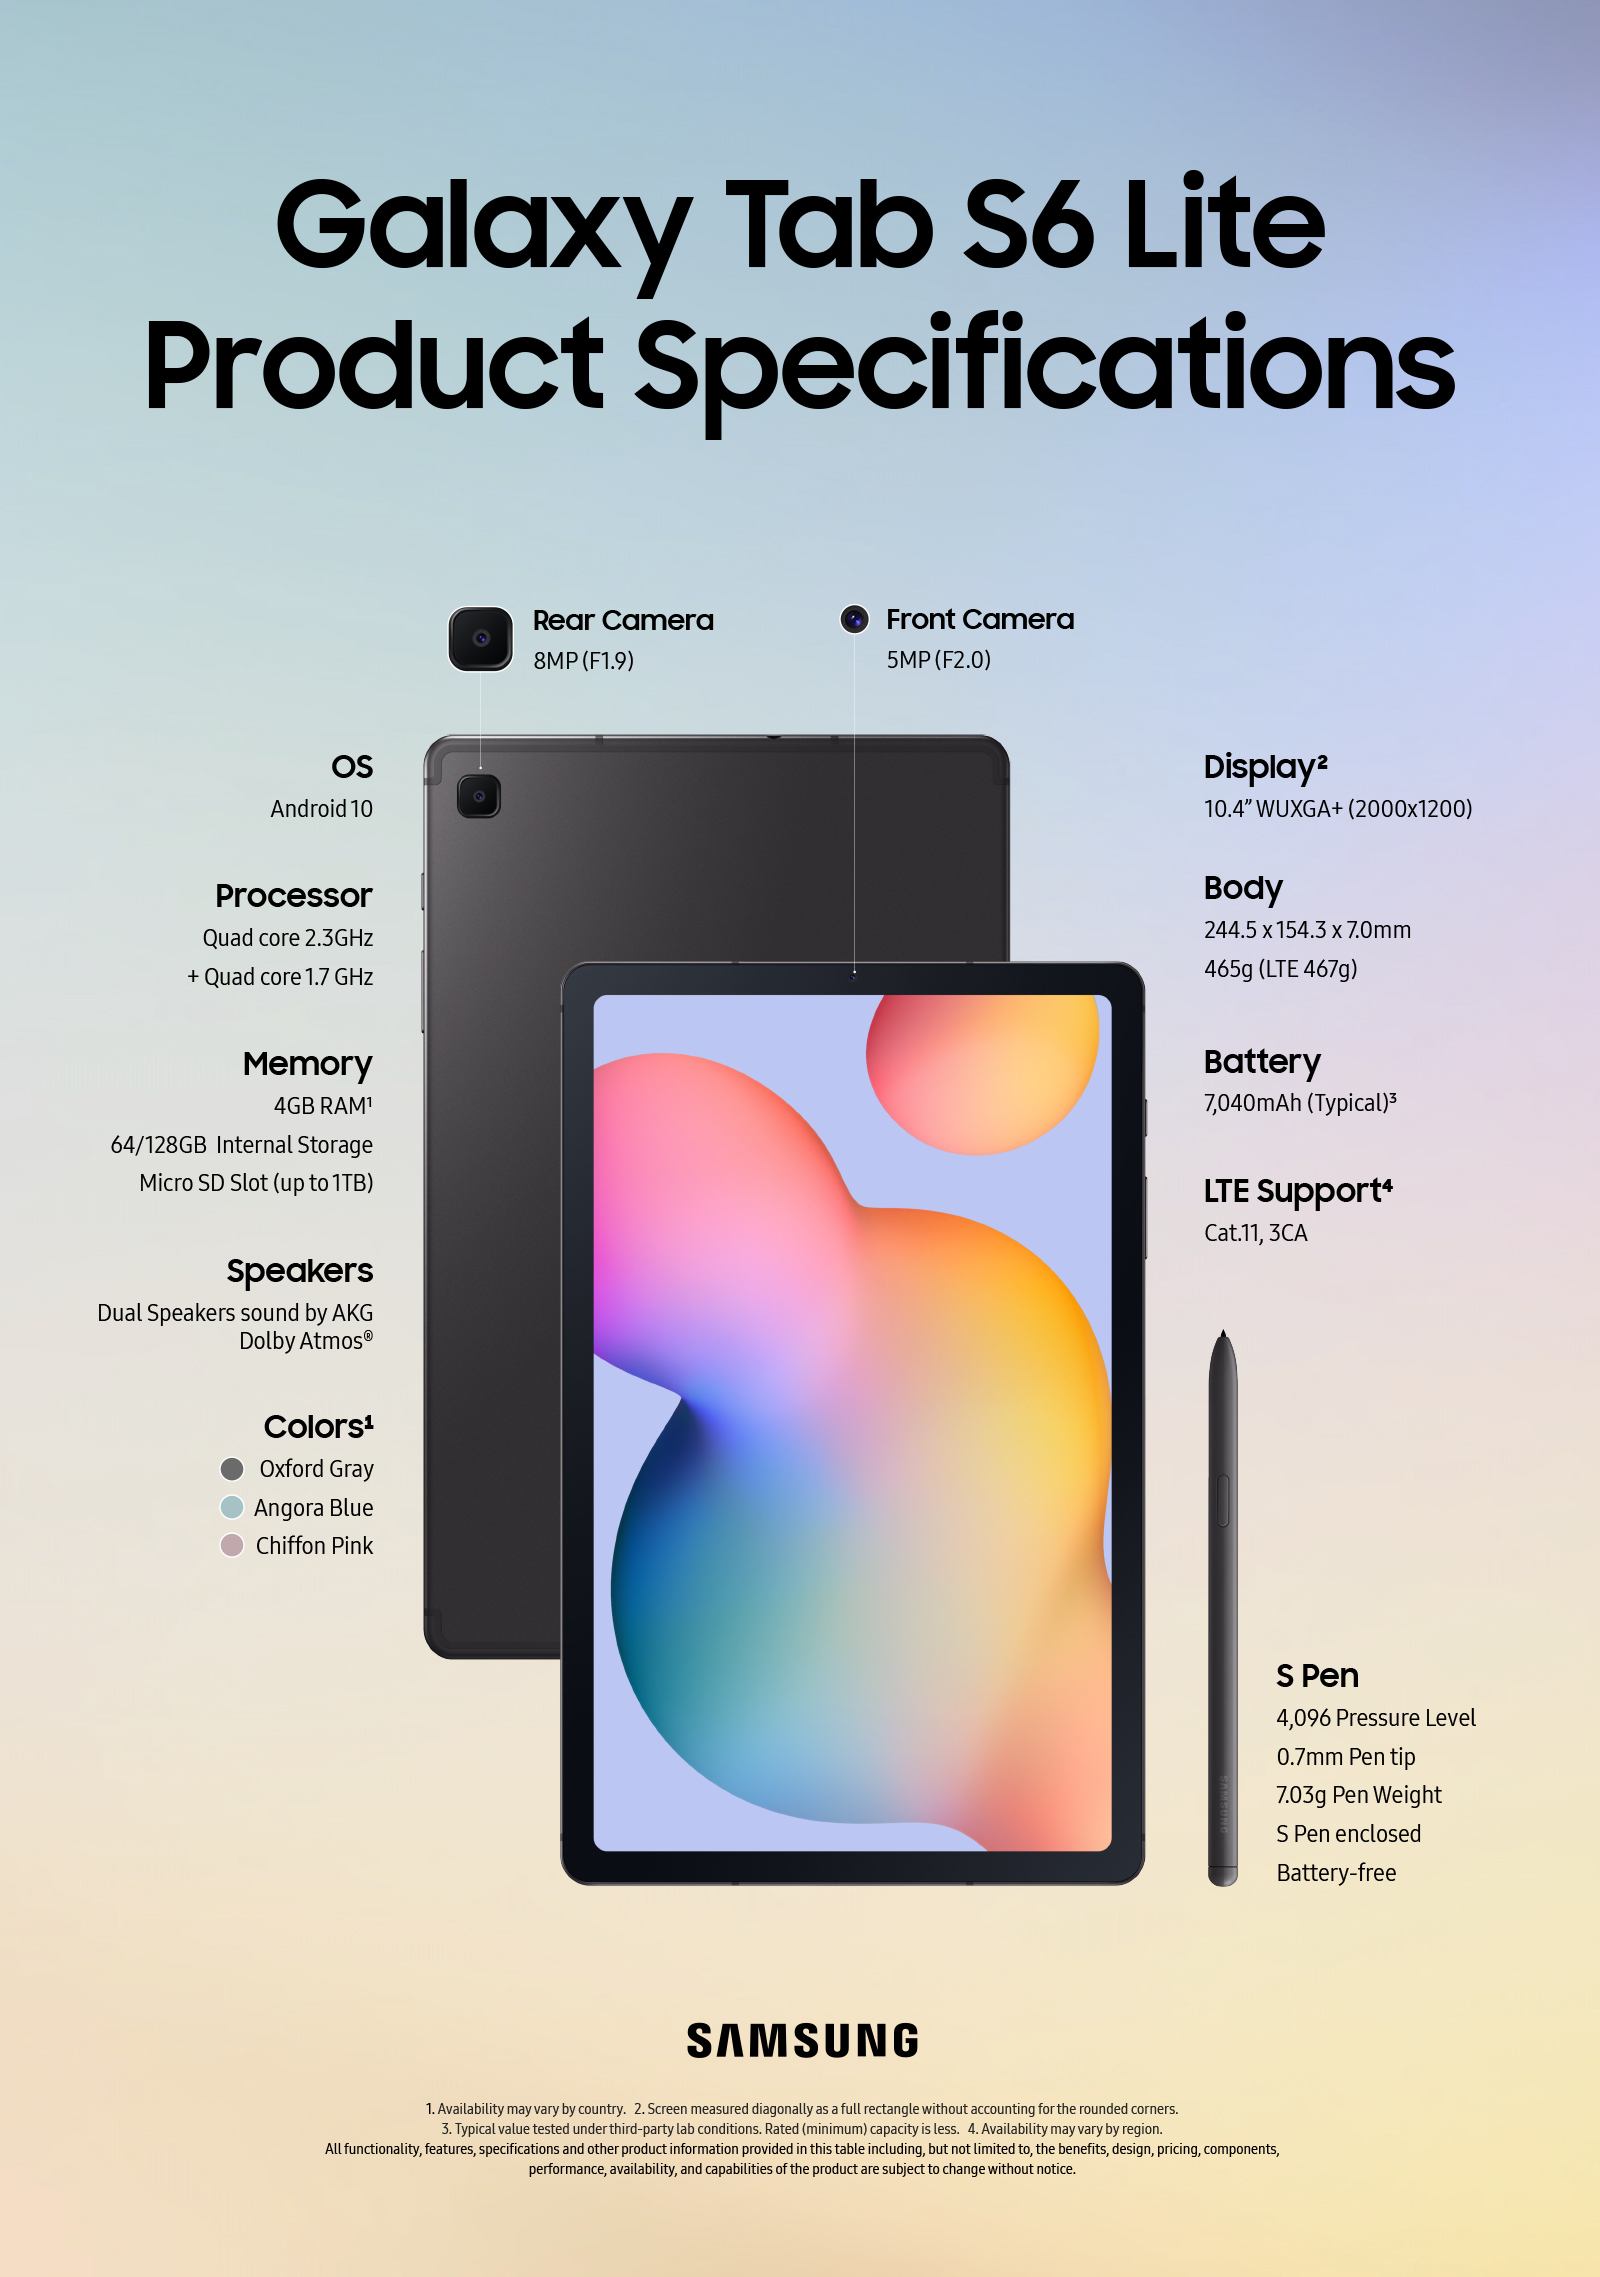 Galaxy Tab S6 Lite spec infographic